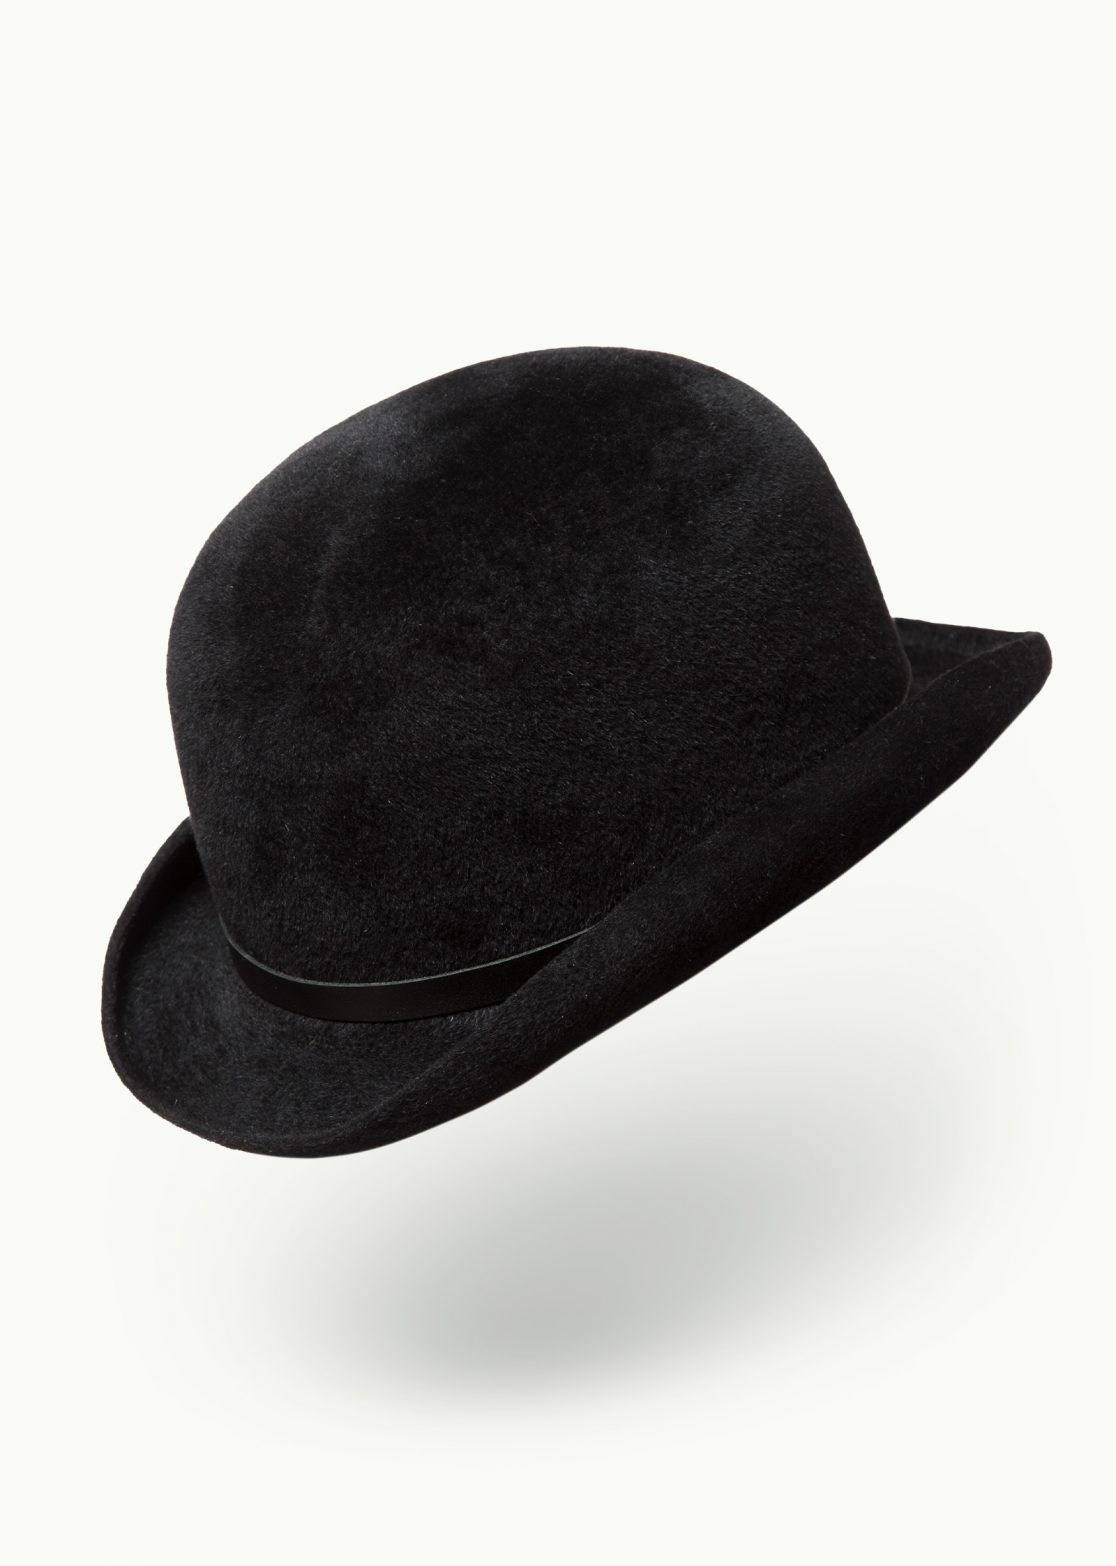 Hats - Unisex - Men - Bowler Black Velour Image Primary